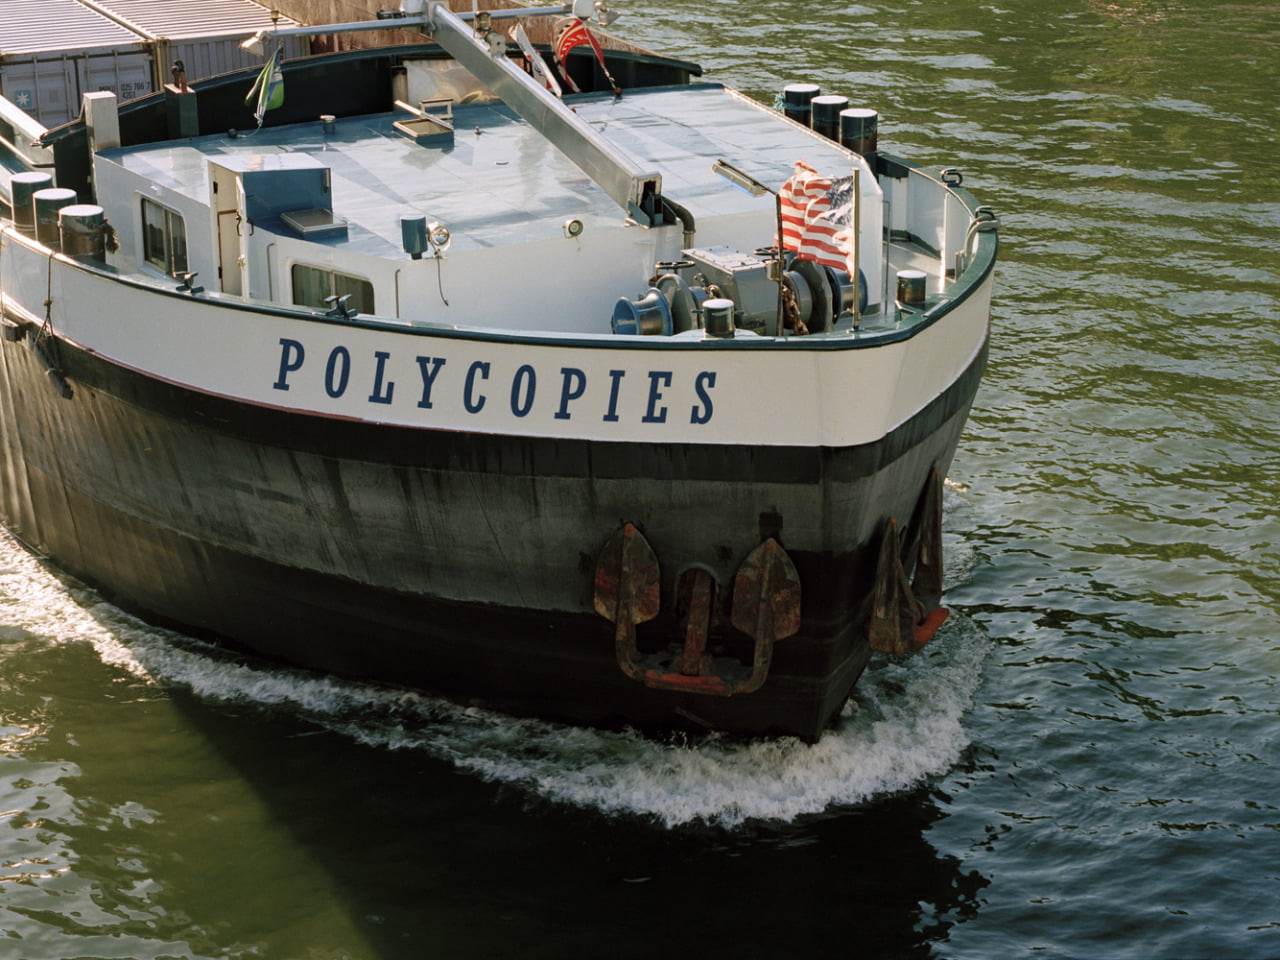 Łódka z napisem Polycopies